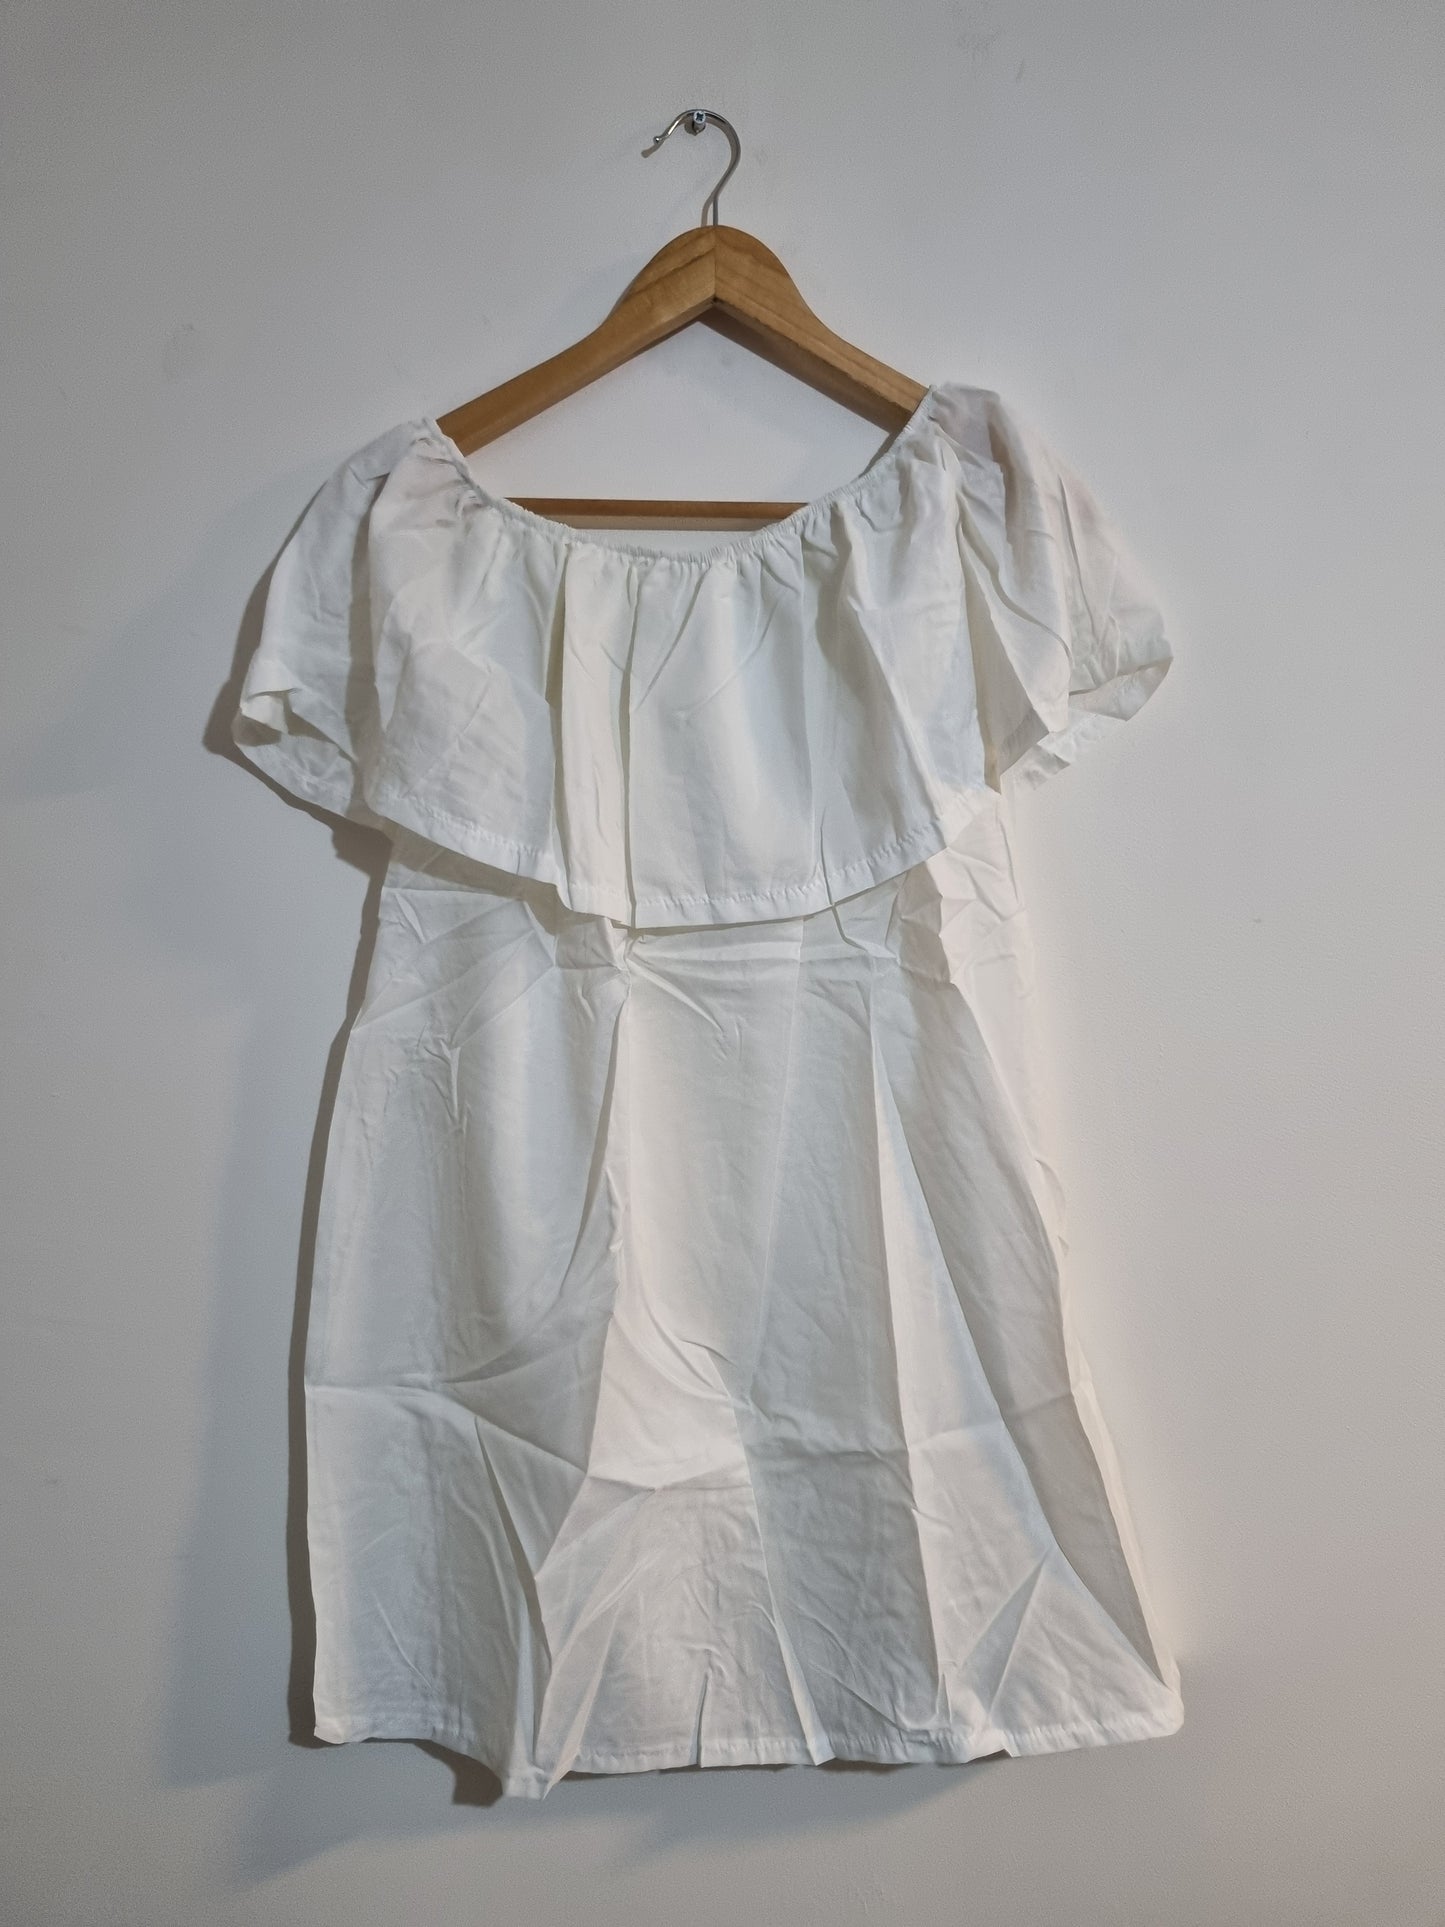 WOMEN'S MEDIUM CREAM/WHITE MINI DRESS